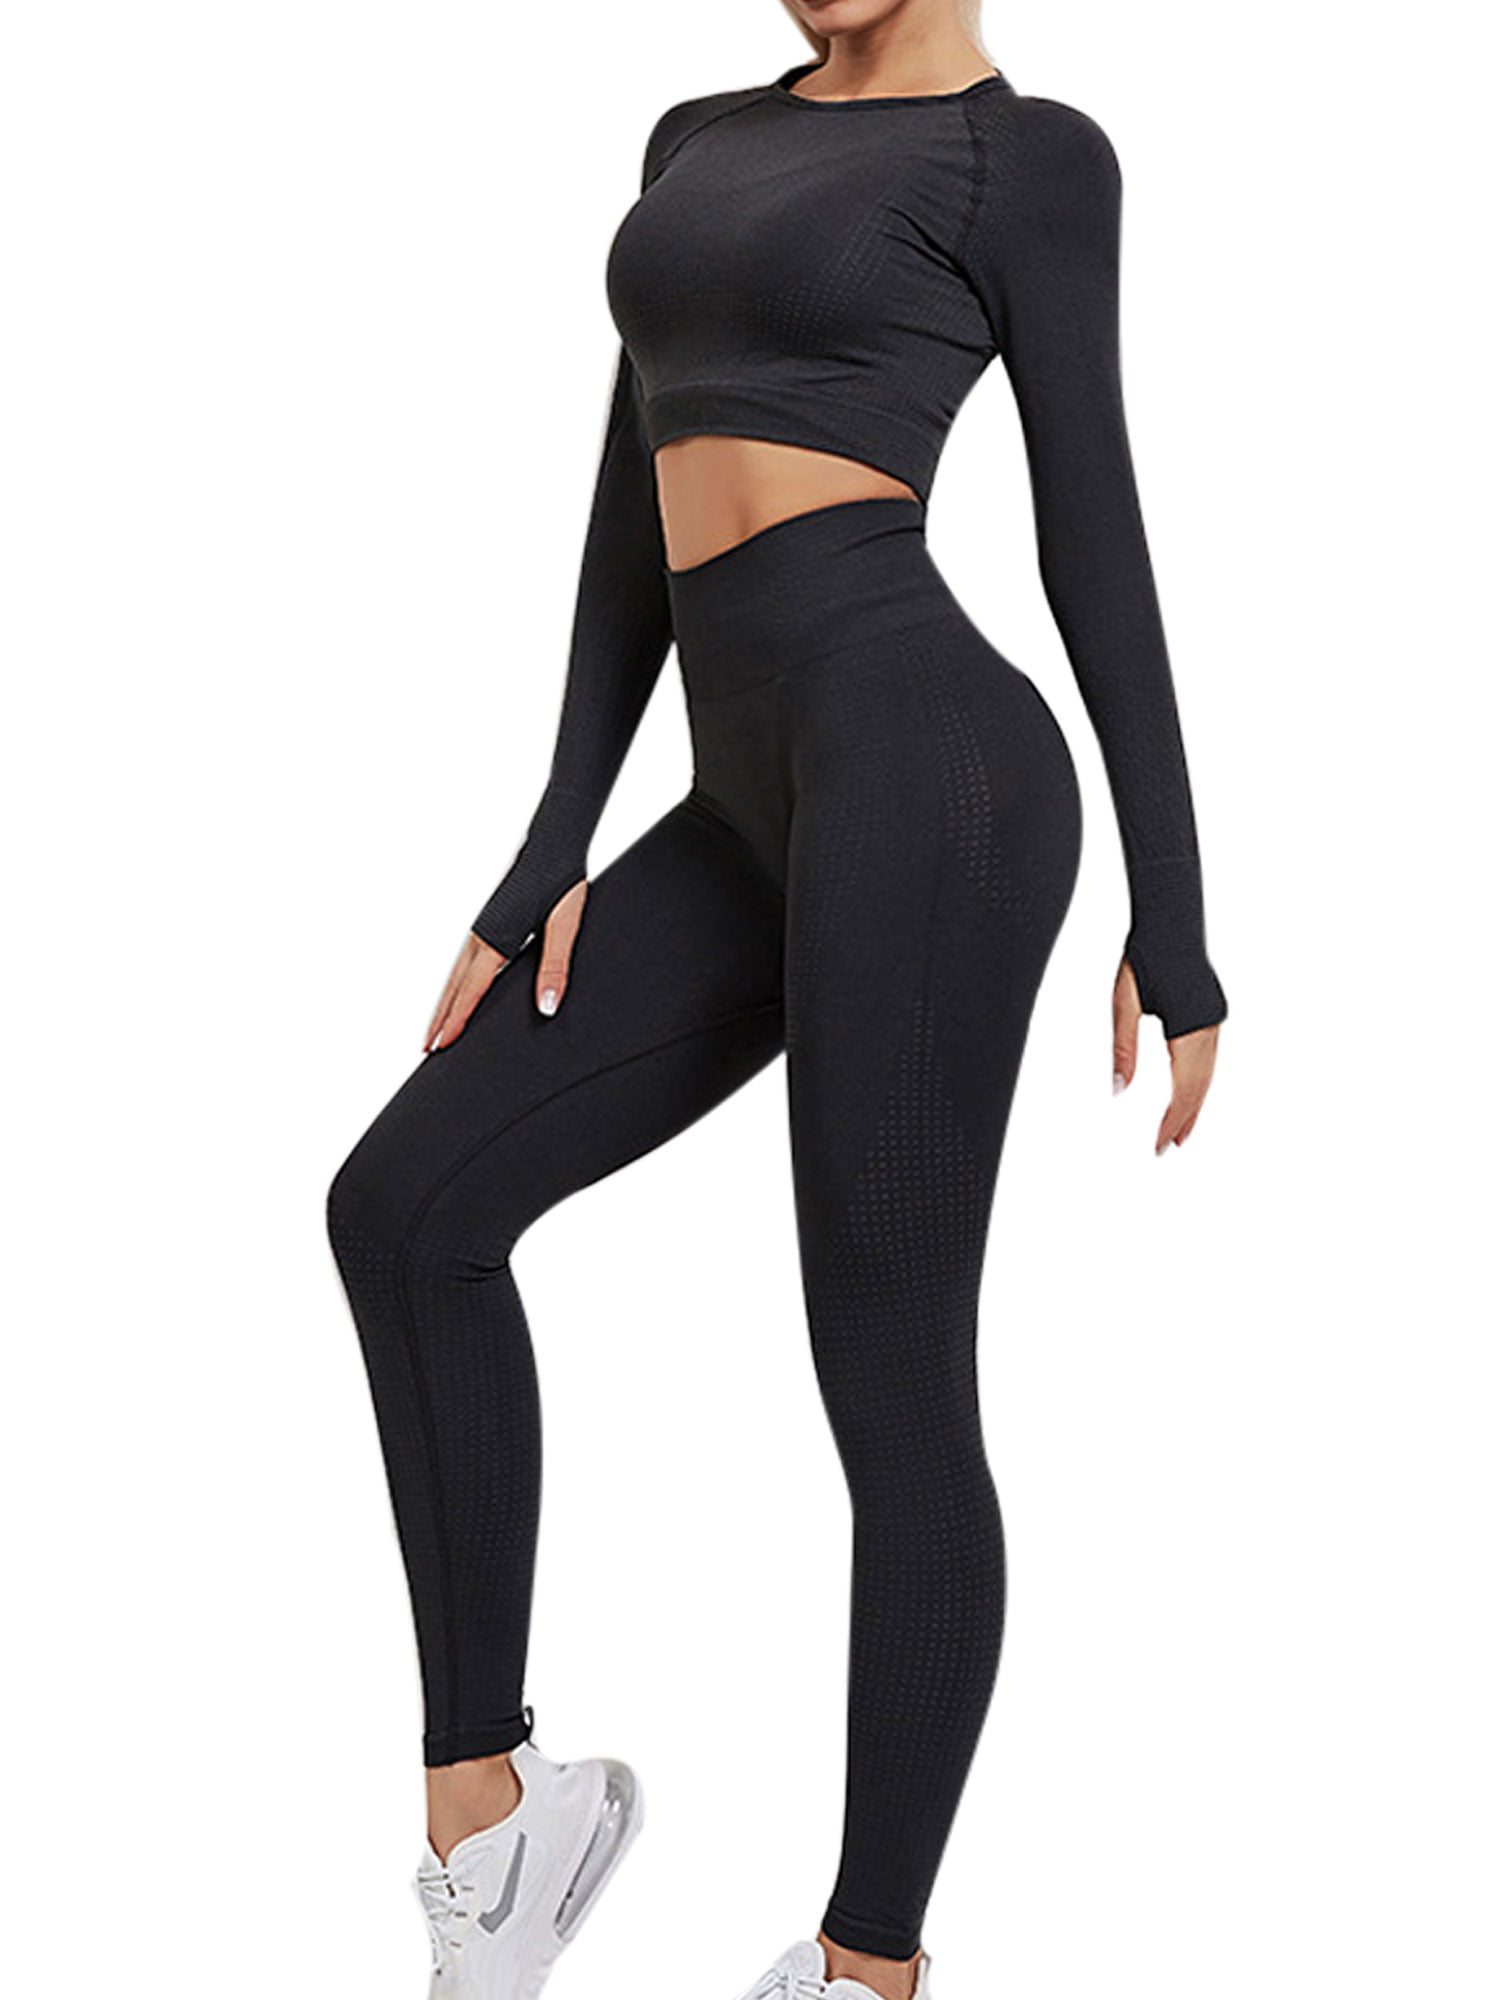 Top Set Gym Yoga Tights S XL Damen Sport Wear Leggings Fitness Hose 